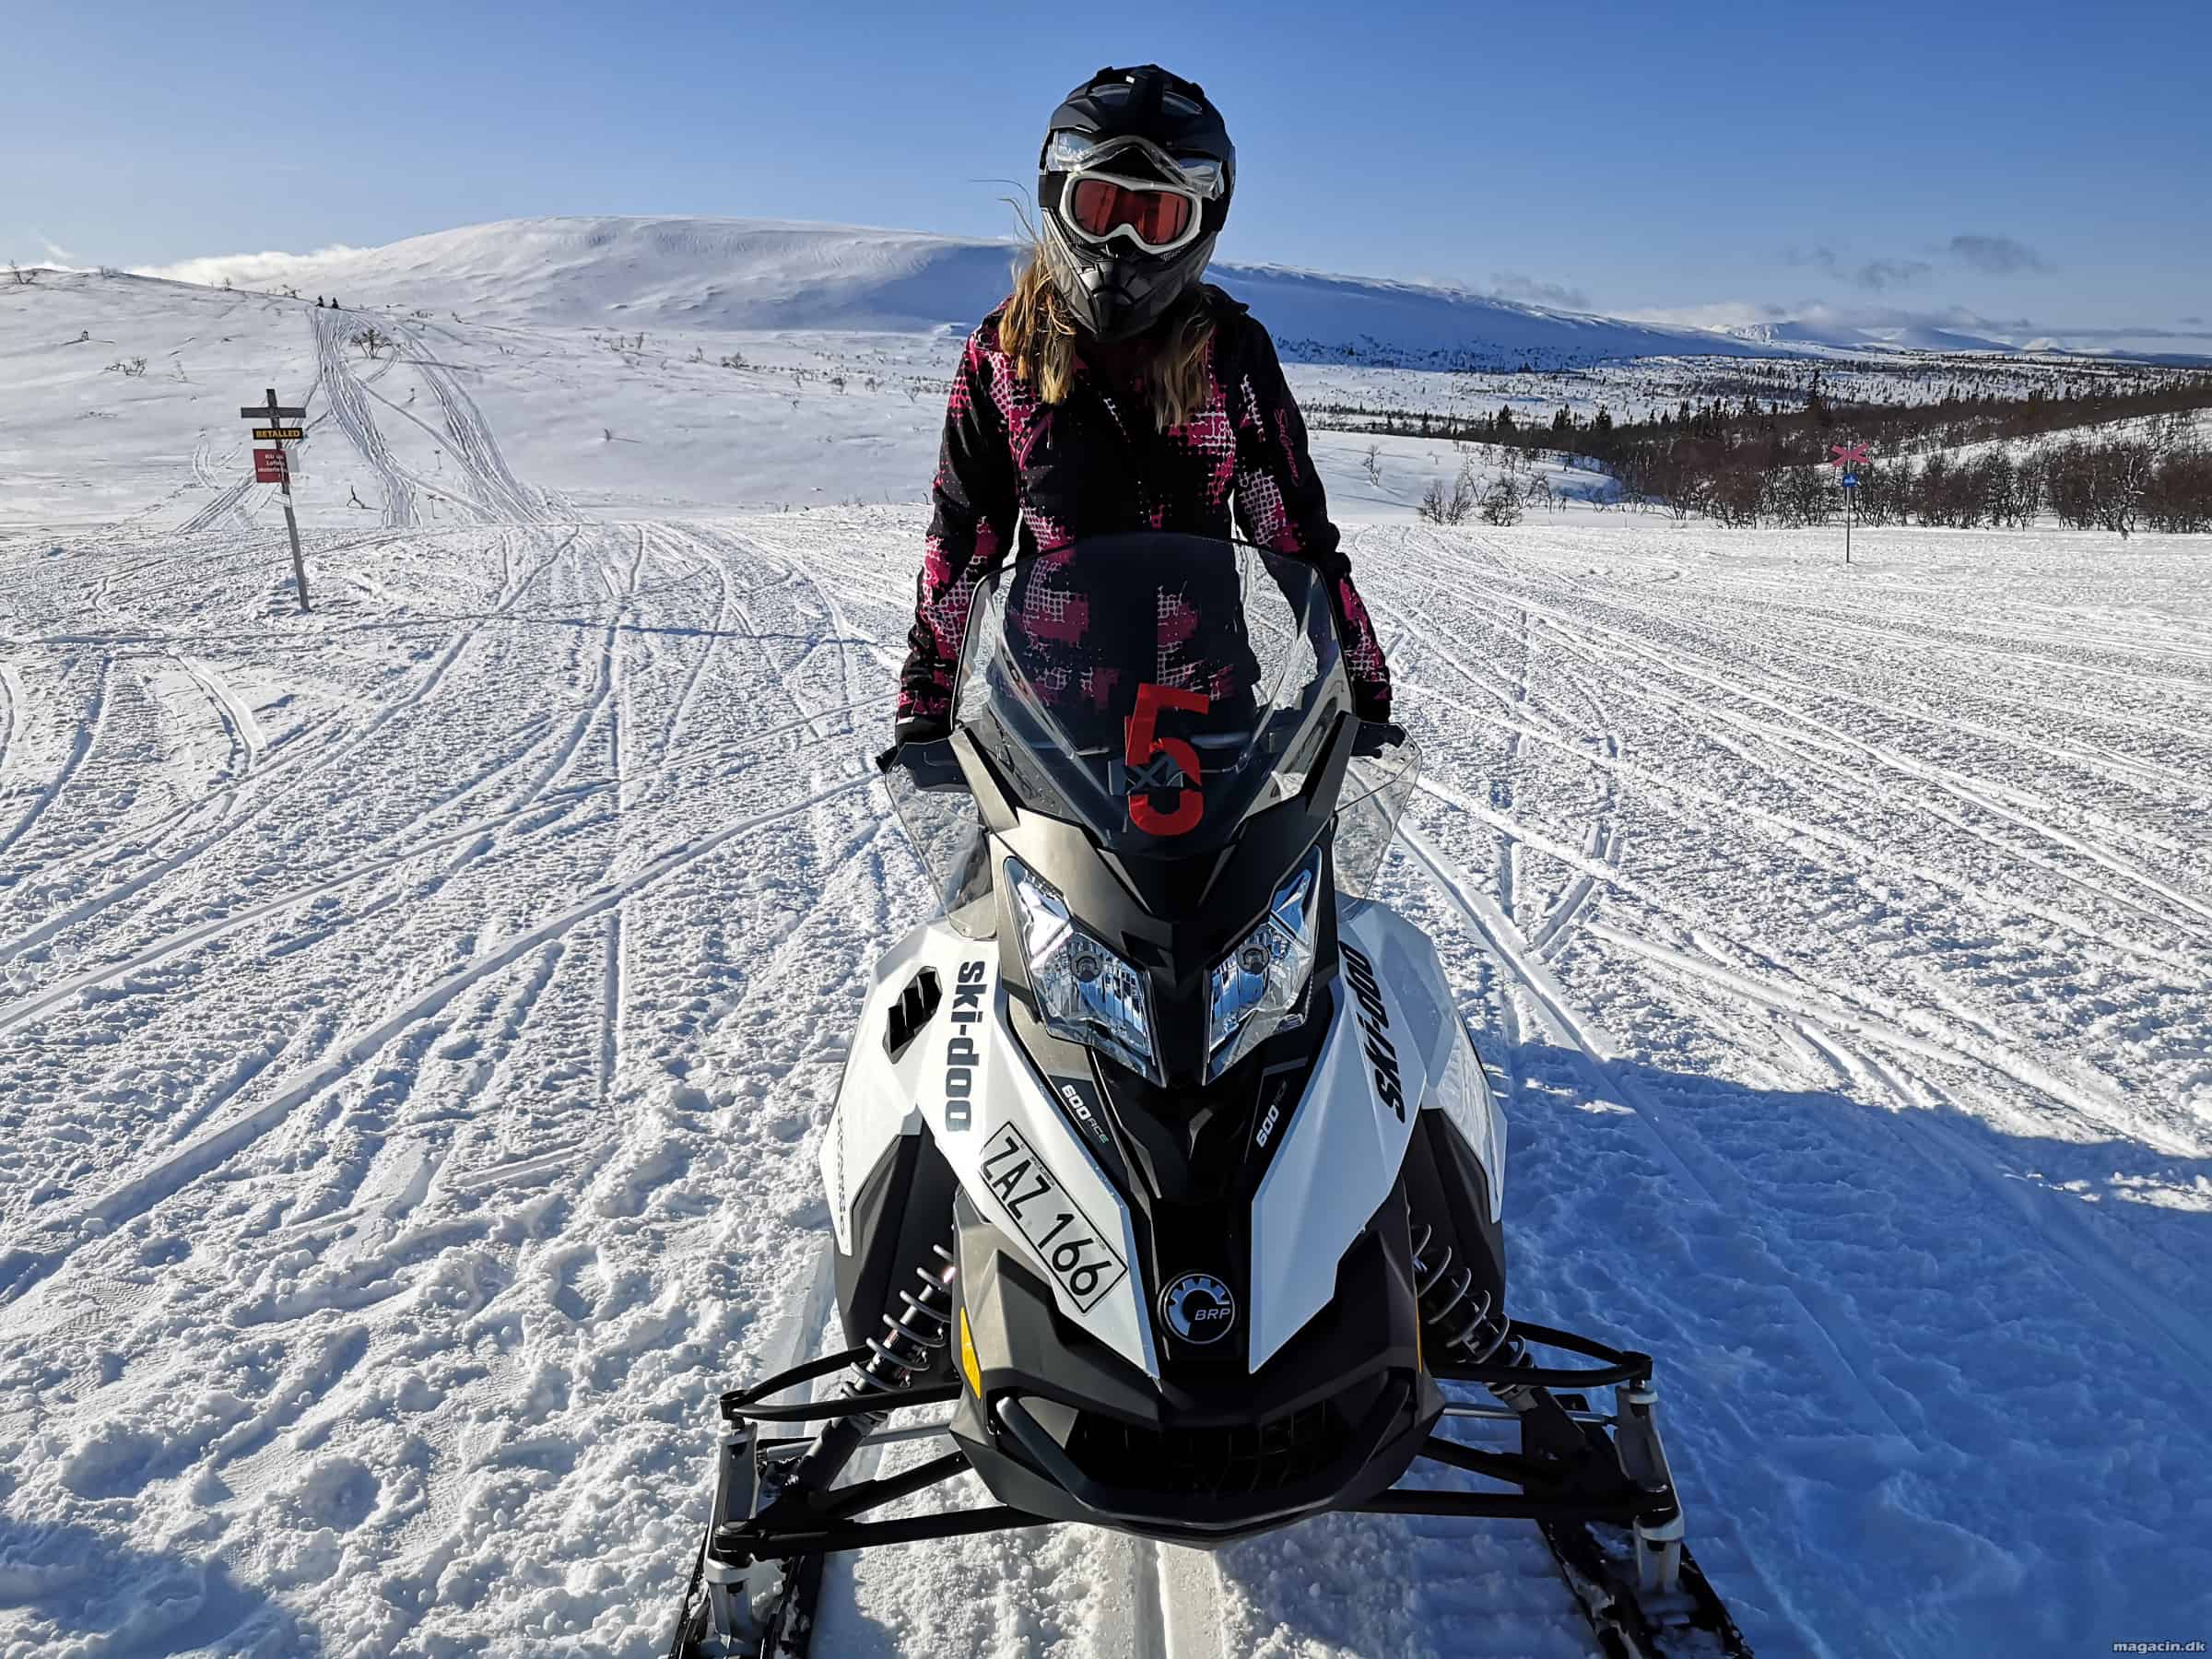 Test: Ski-Doo Grand Touring 600 – Den perfekte PMS kur